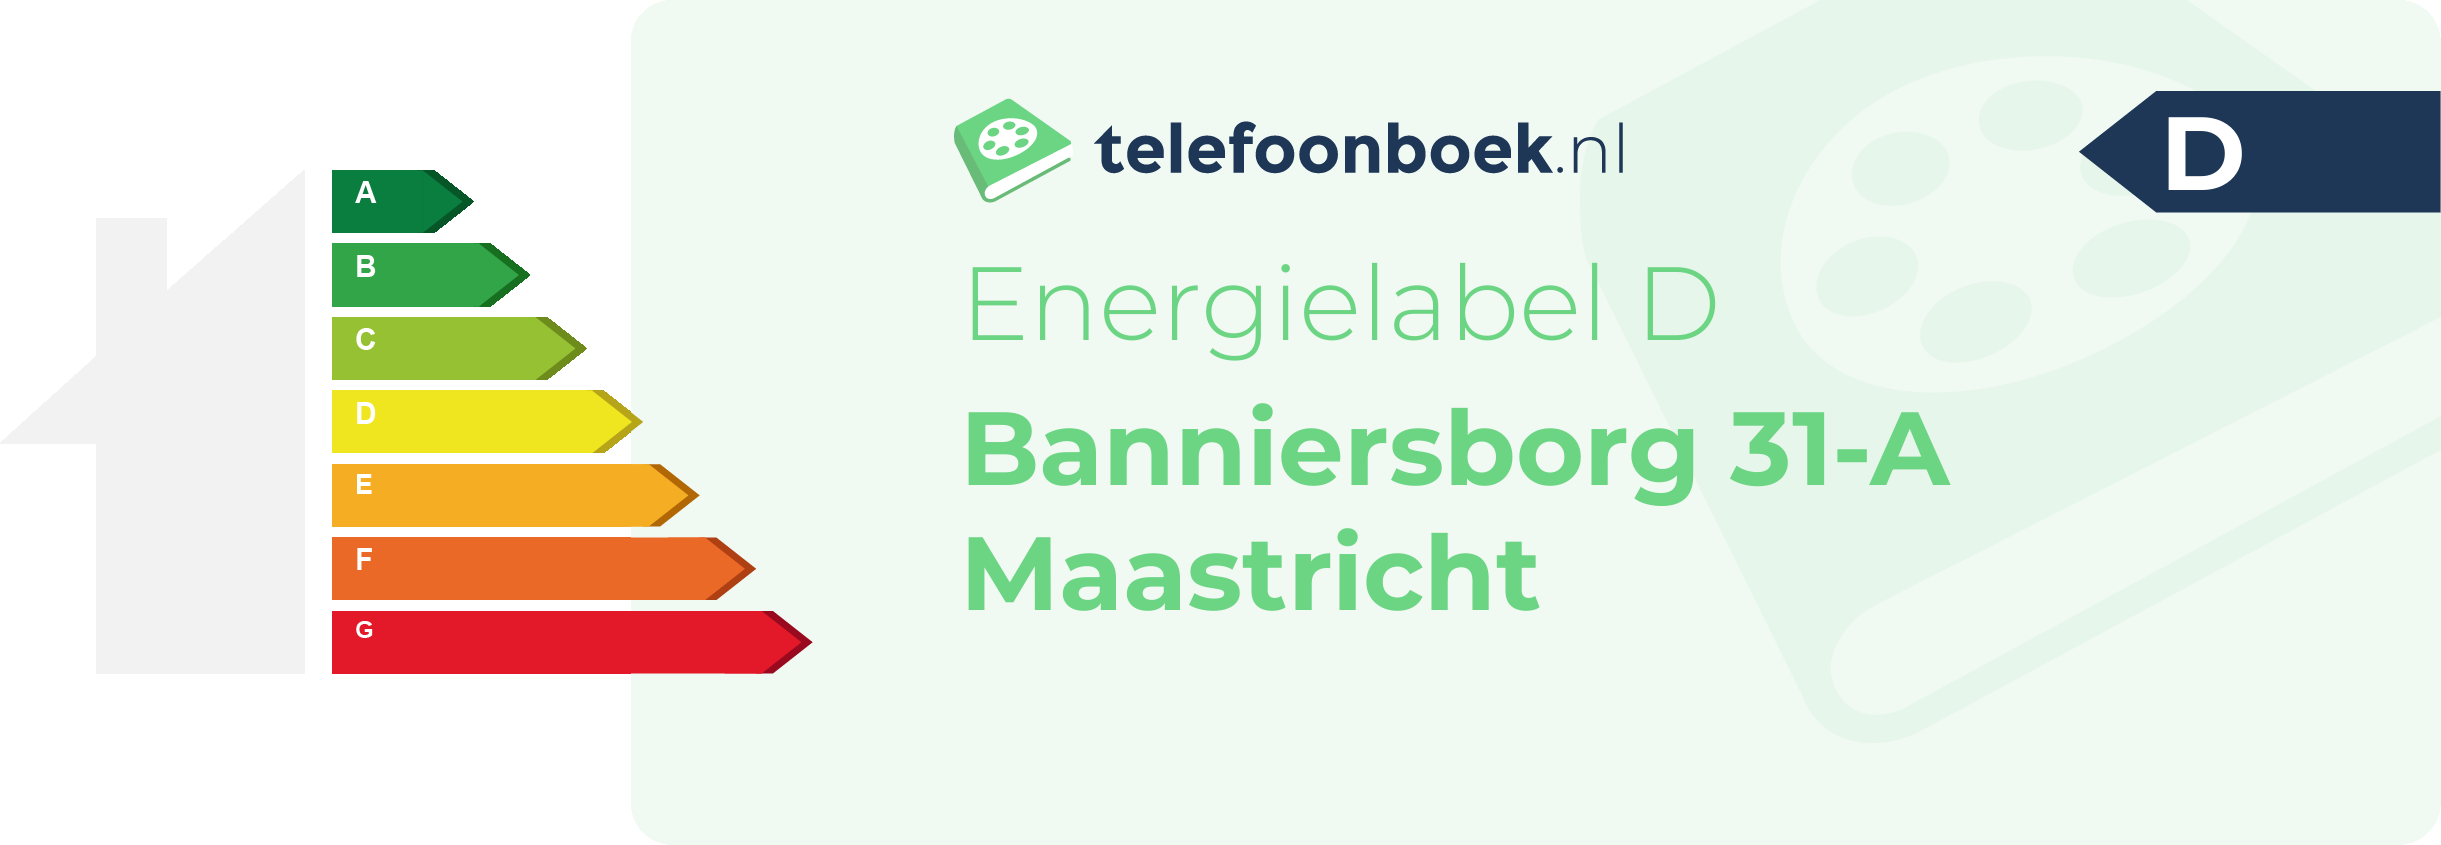 Energielabel Banniersborg 31-A Maastricht